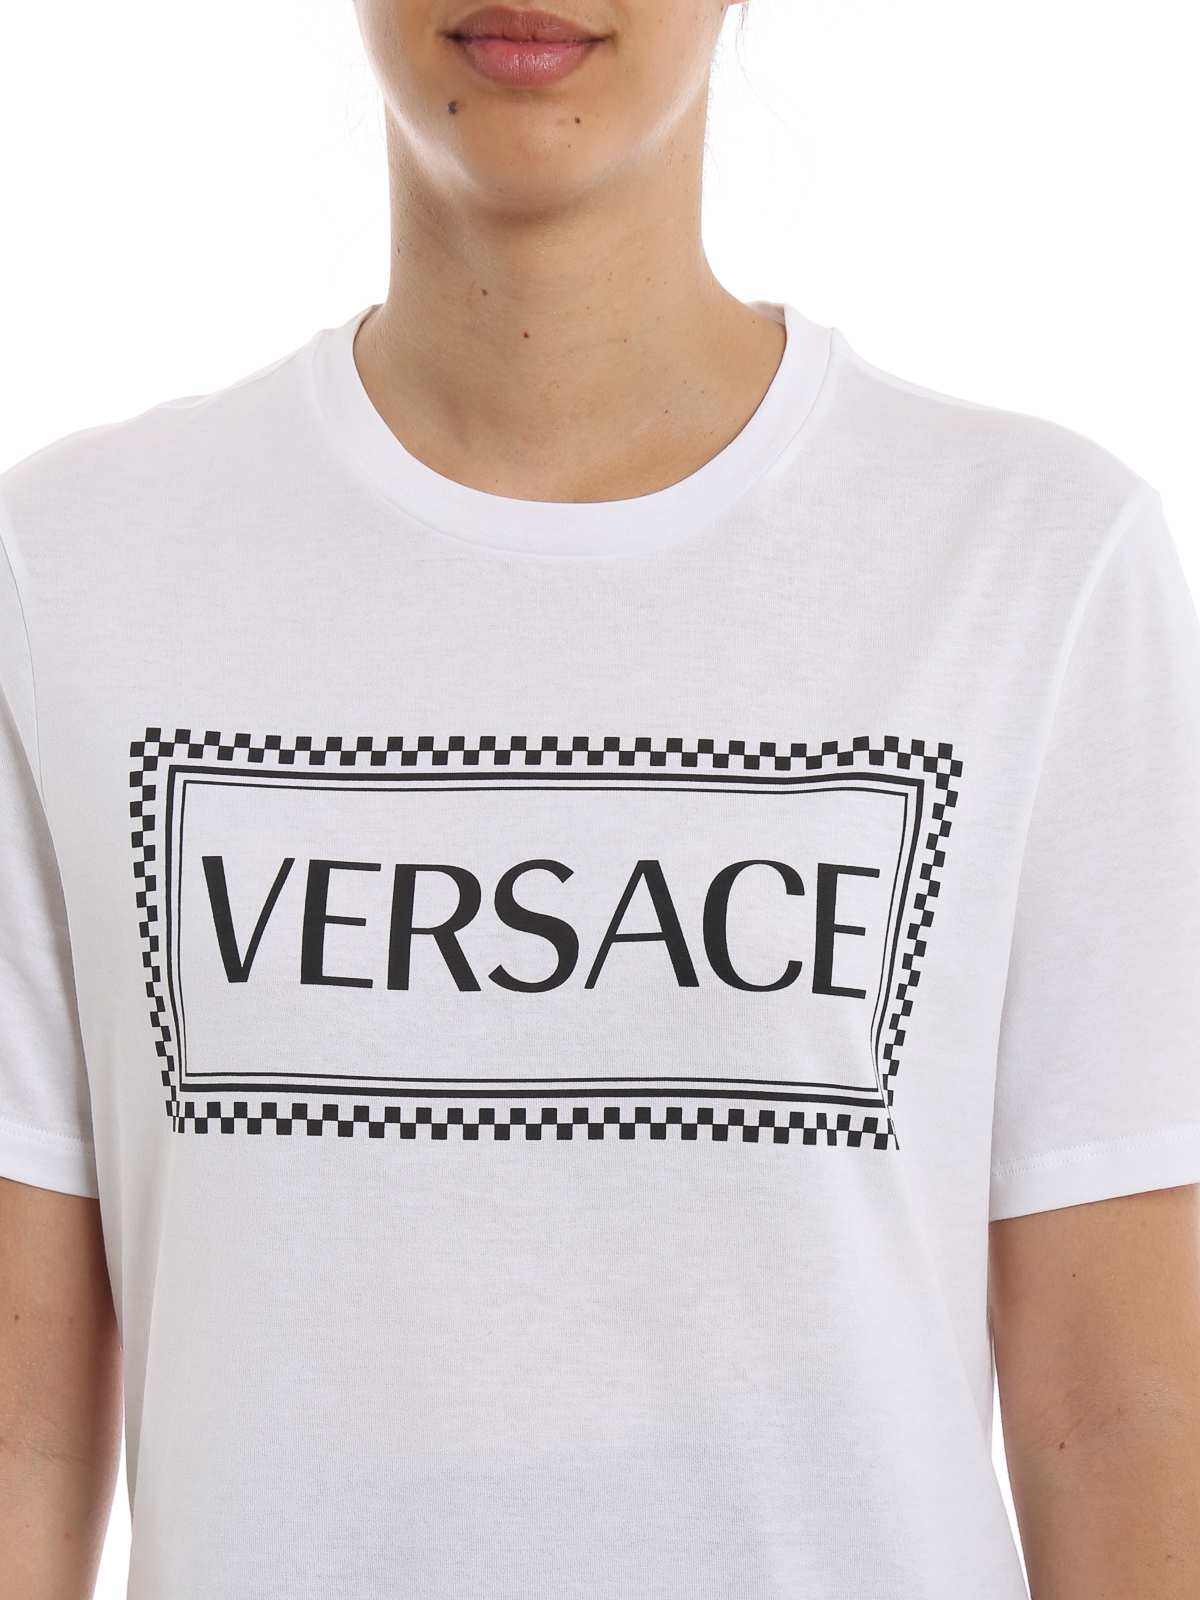 Versace Tシャツ Versace 90s Vintage Tシャツ 15a26a48